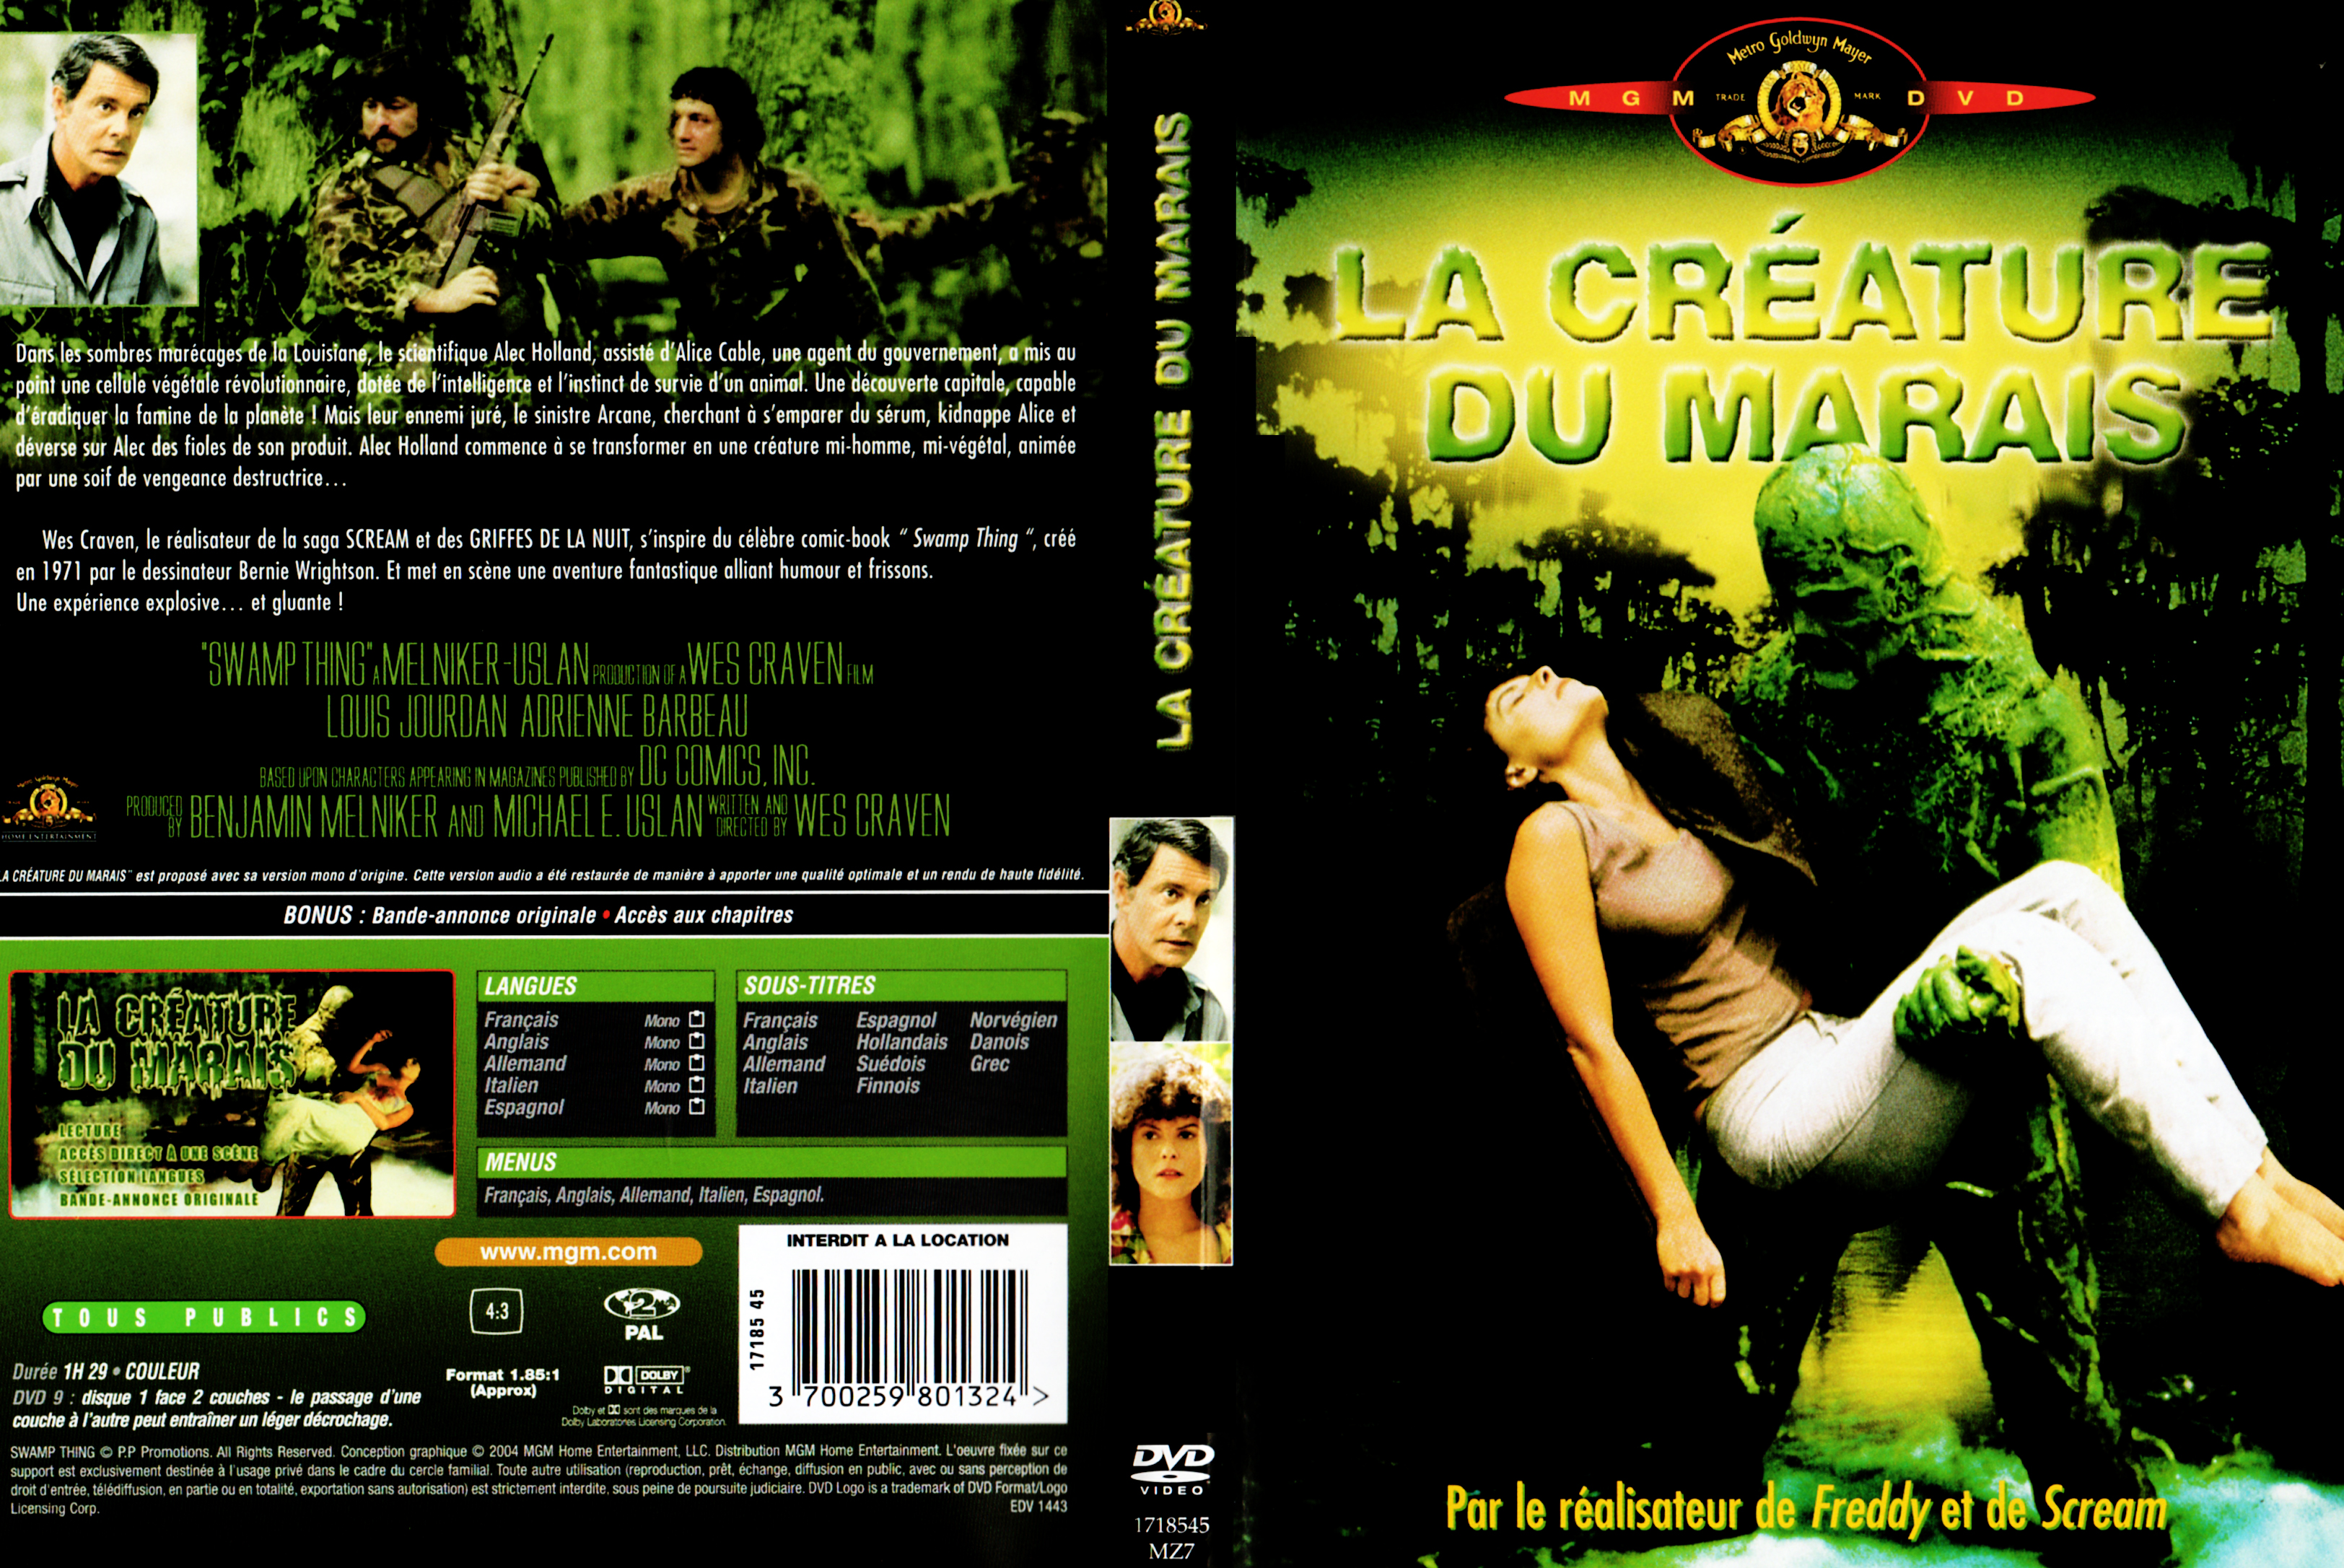 Jaquette DVD La crature du marais v2